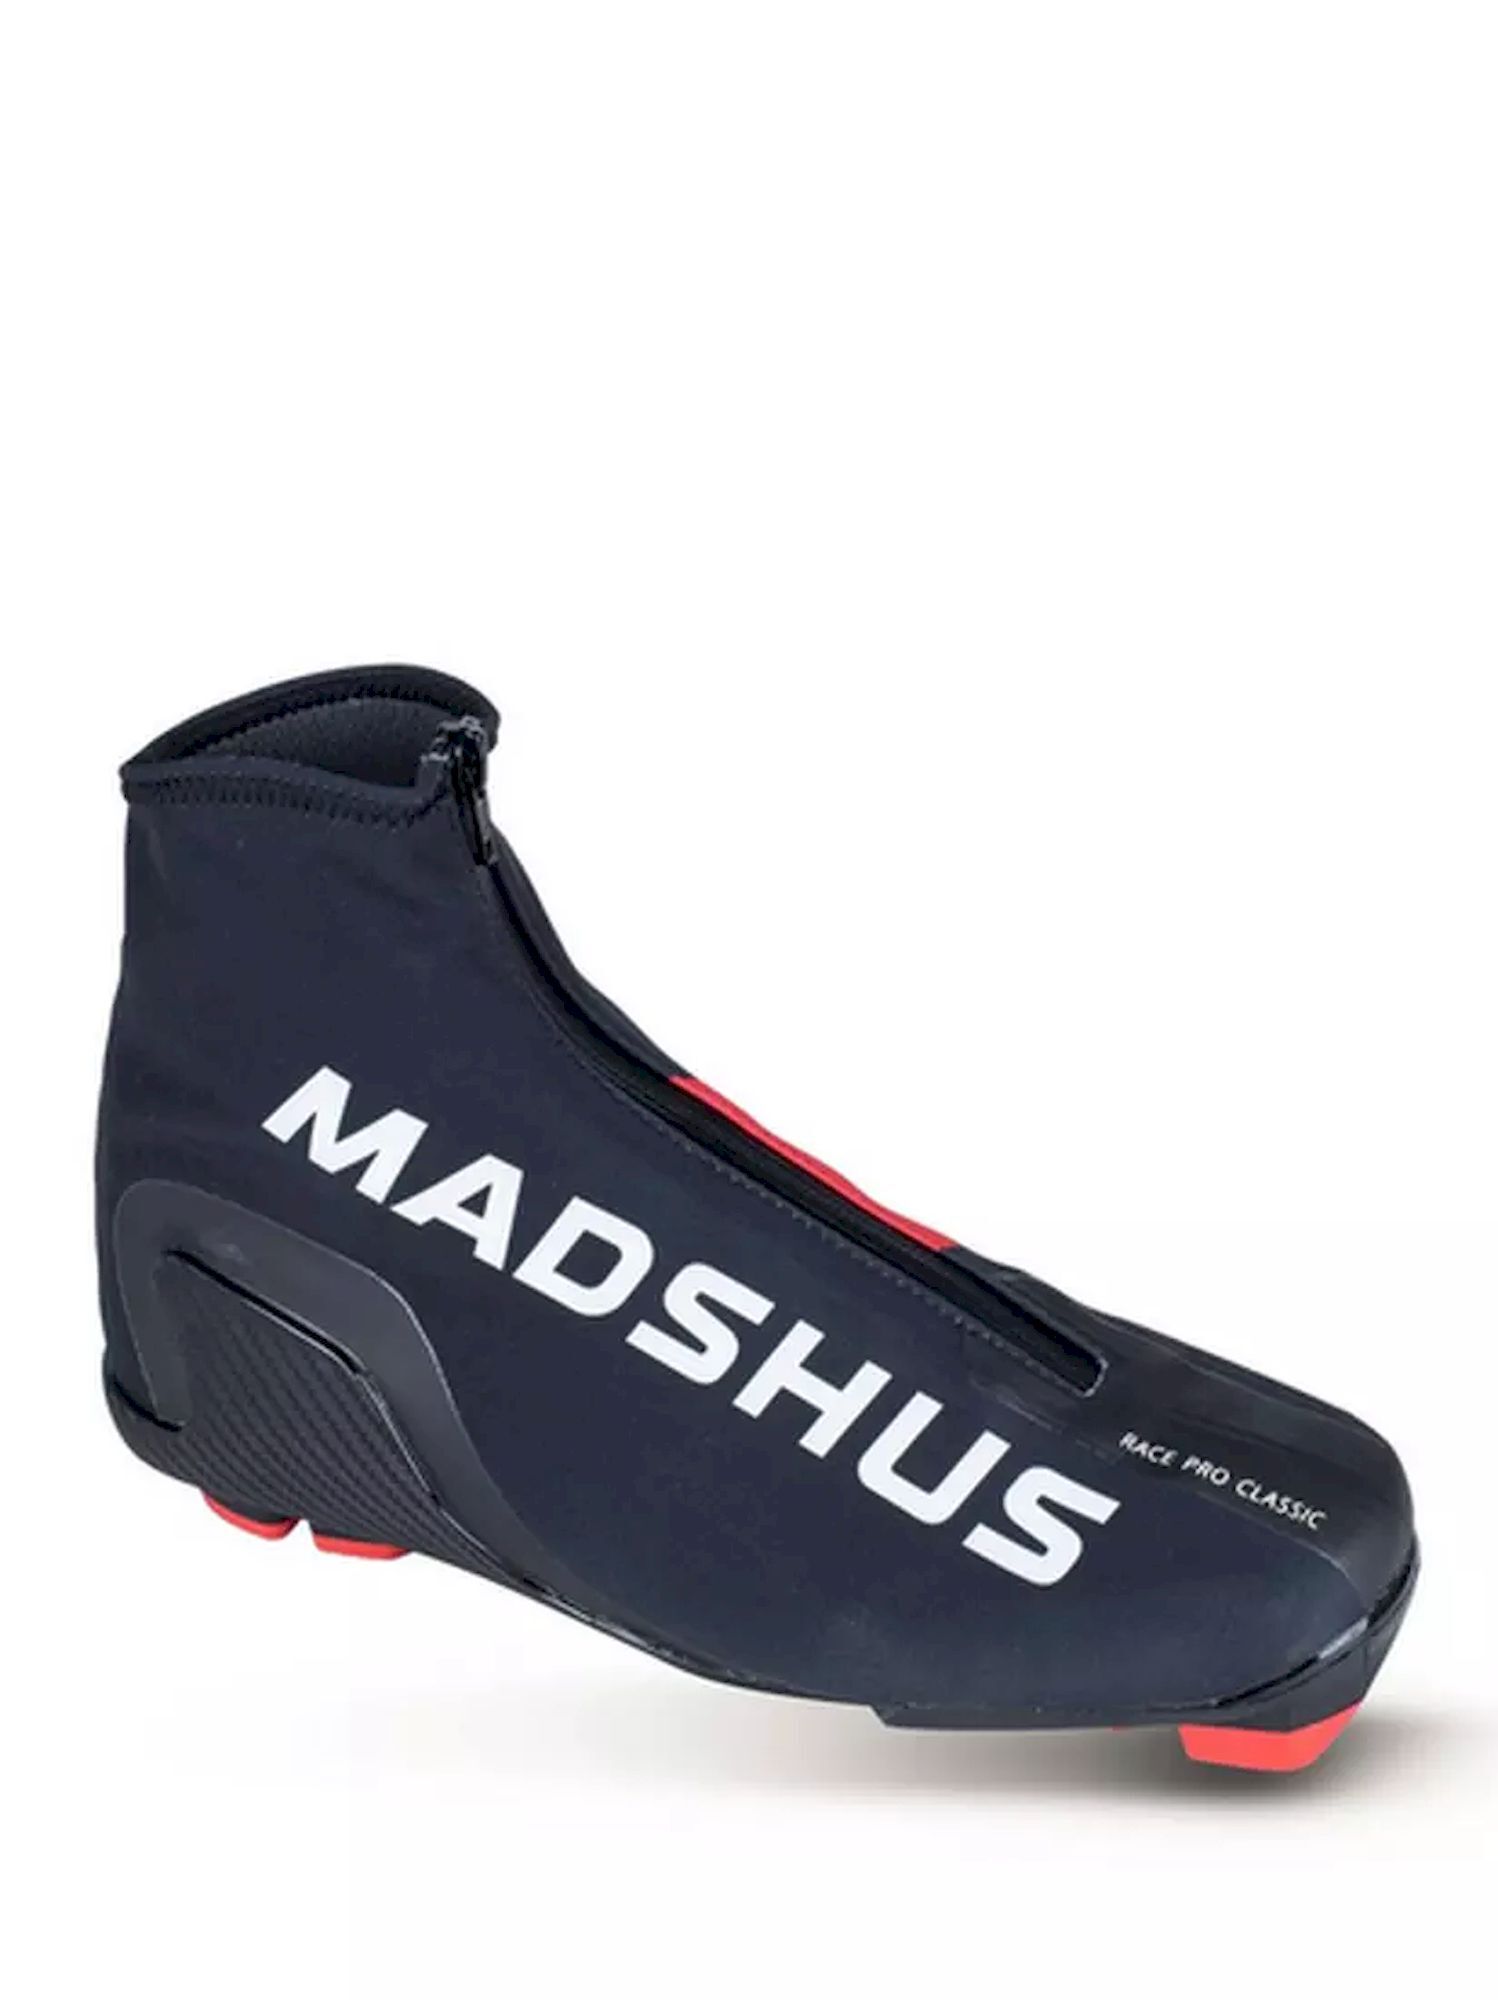 Madshus Race Pro Classic - Längdpjäxor | Hardloop